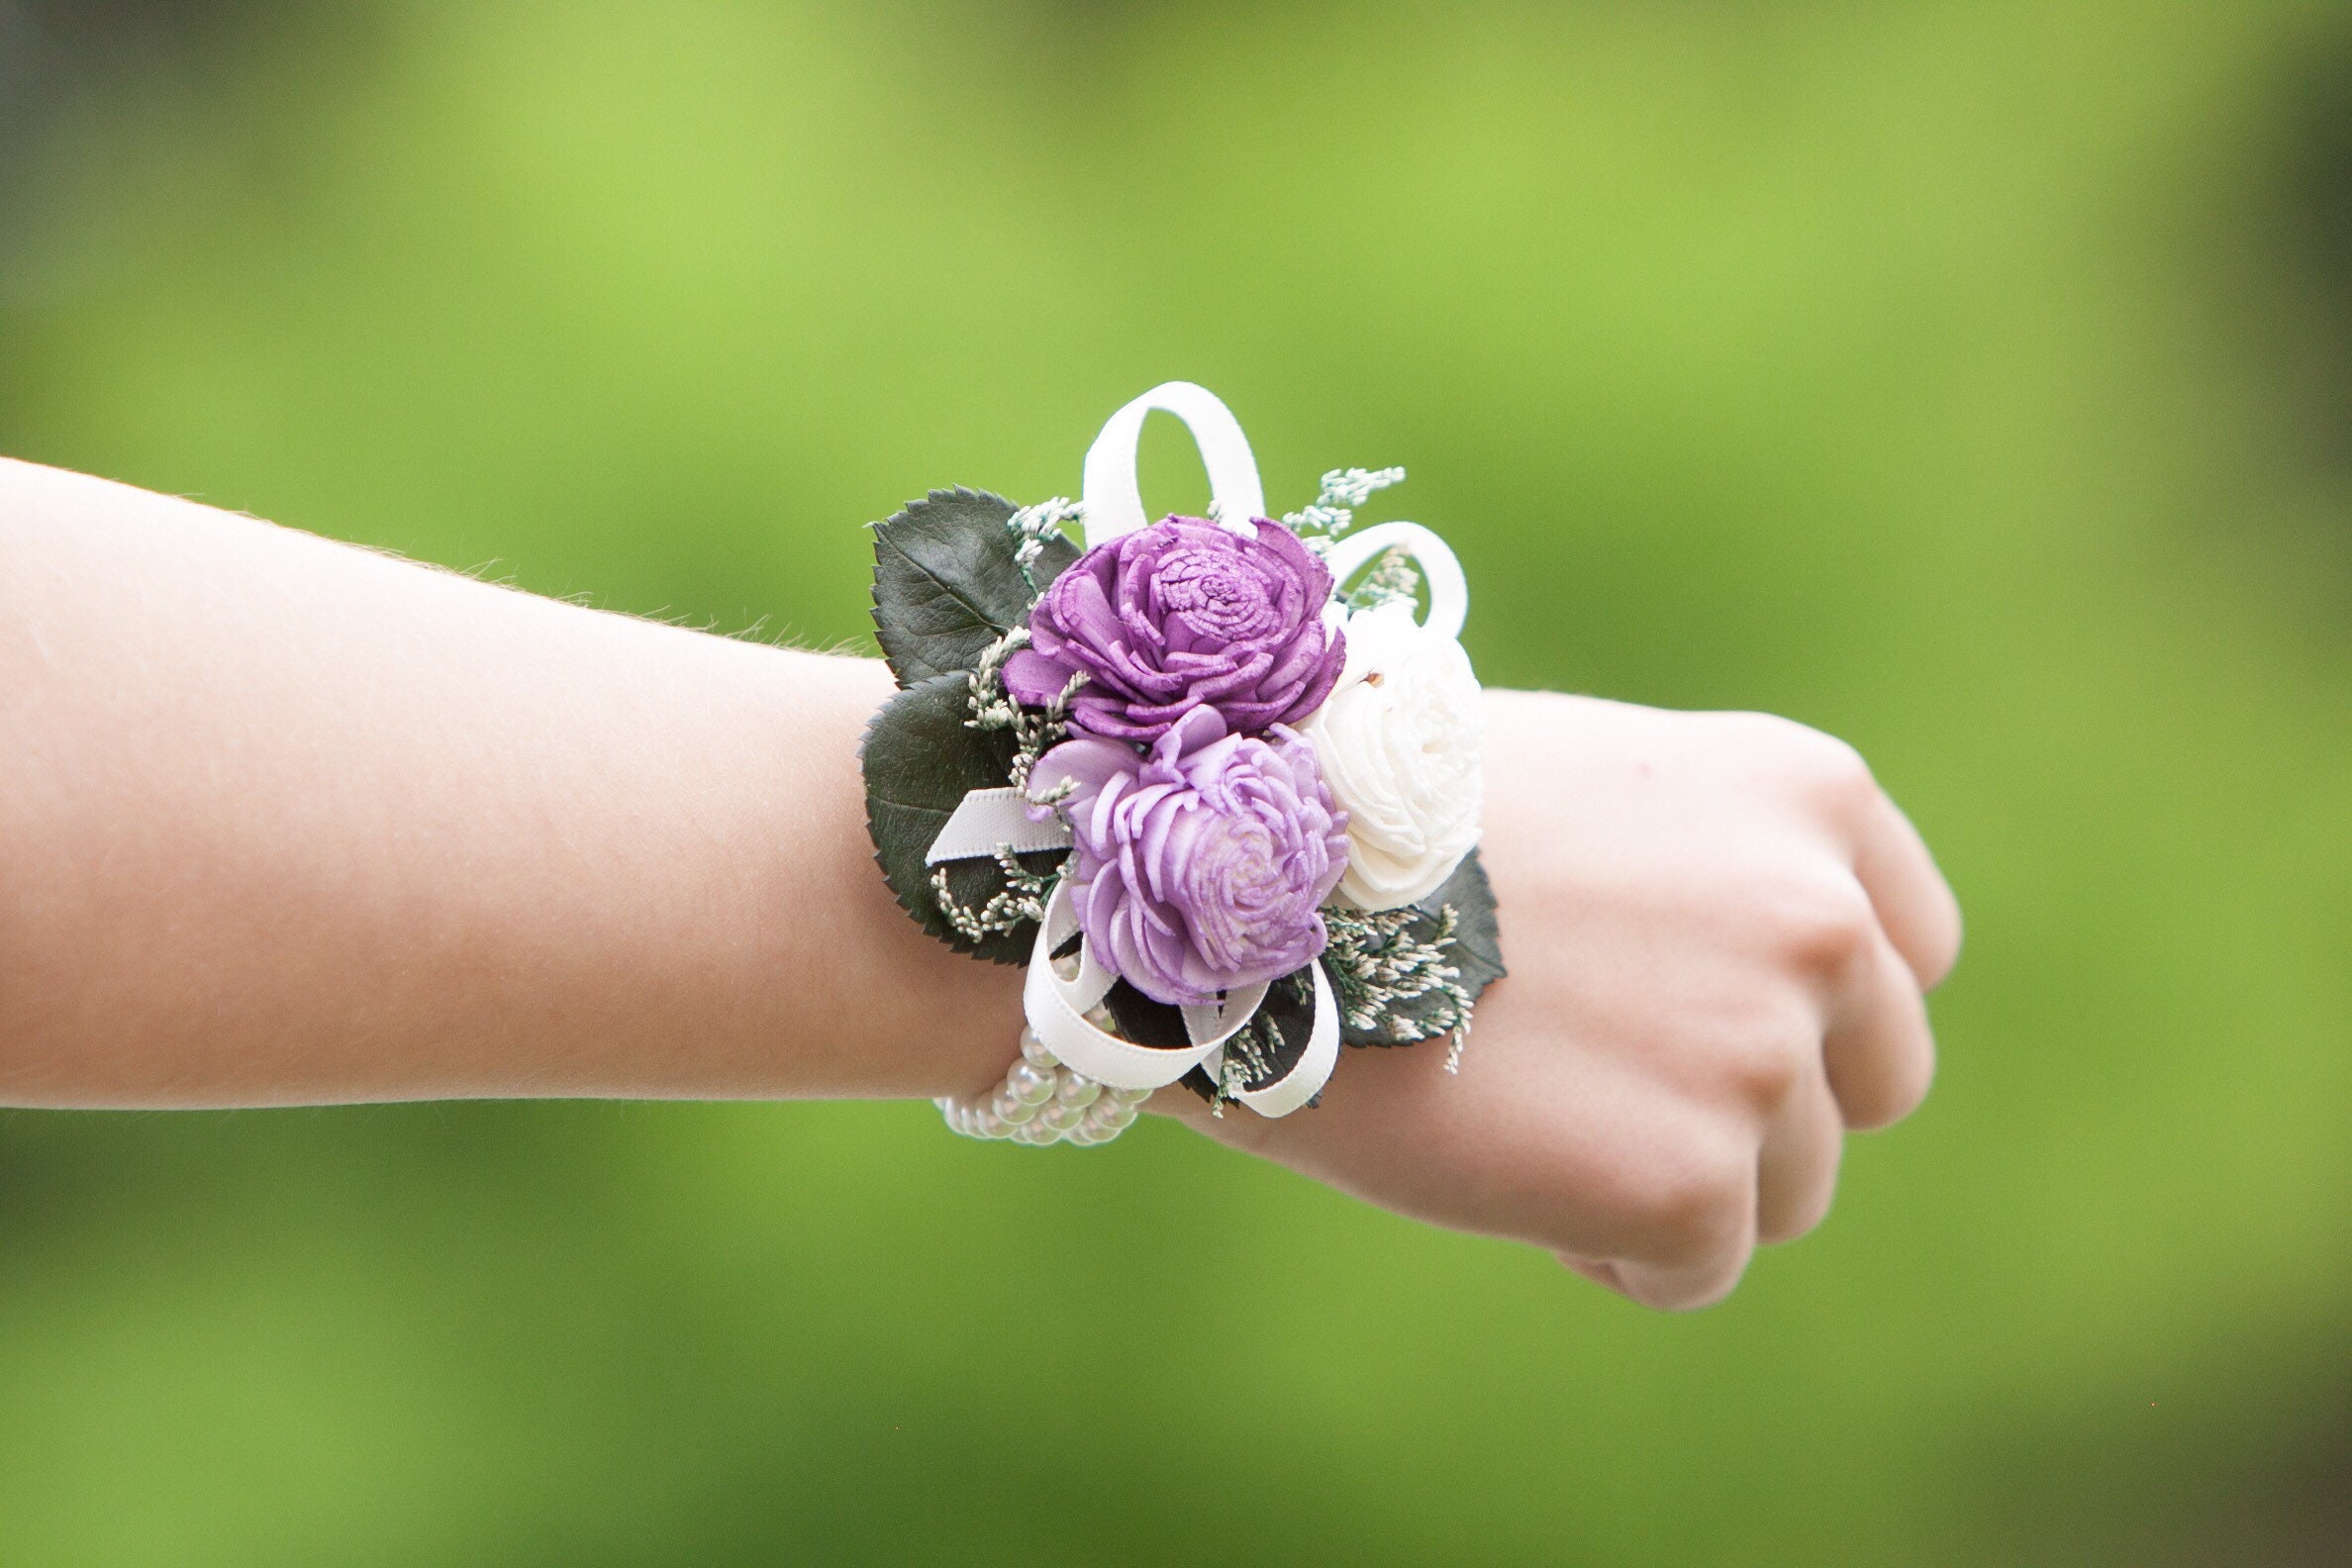 Girls Purple Sola Flower Wristlet Corsage